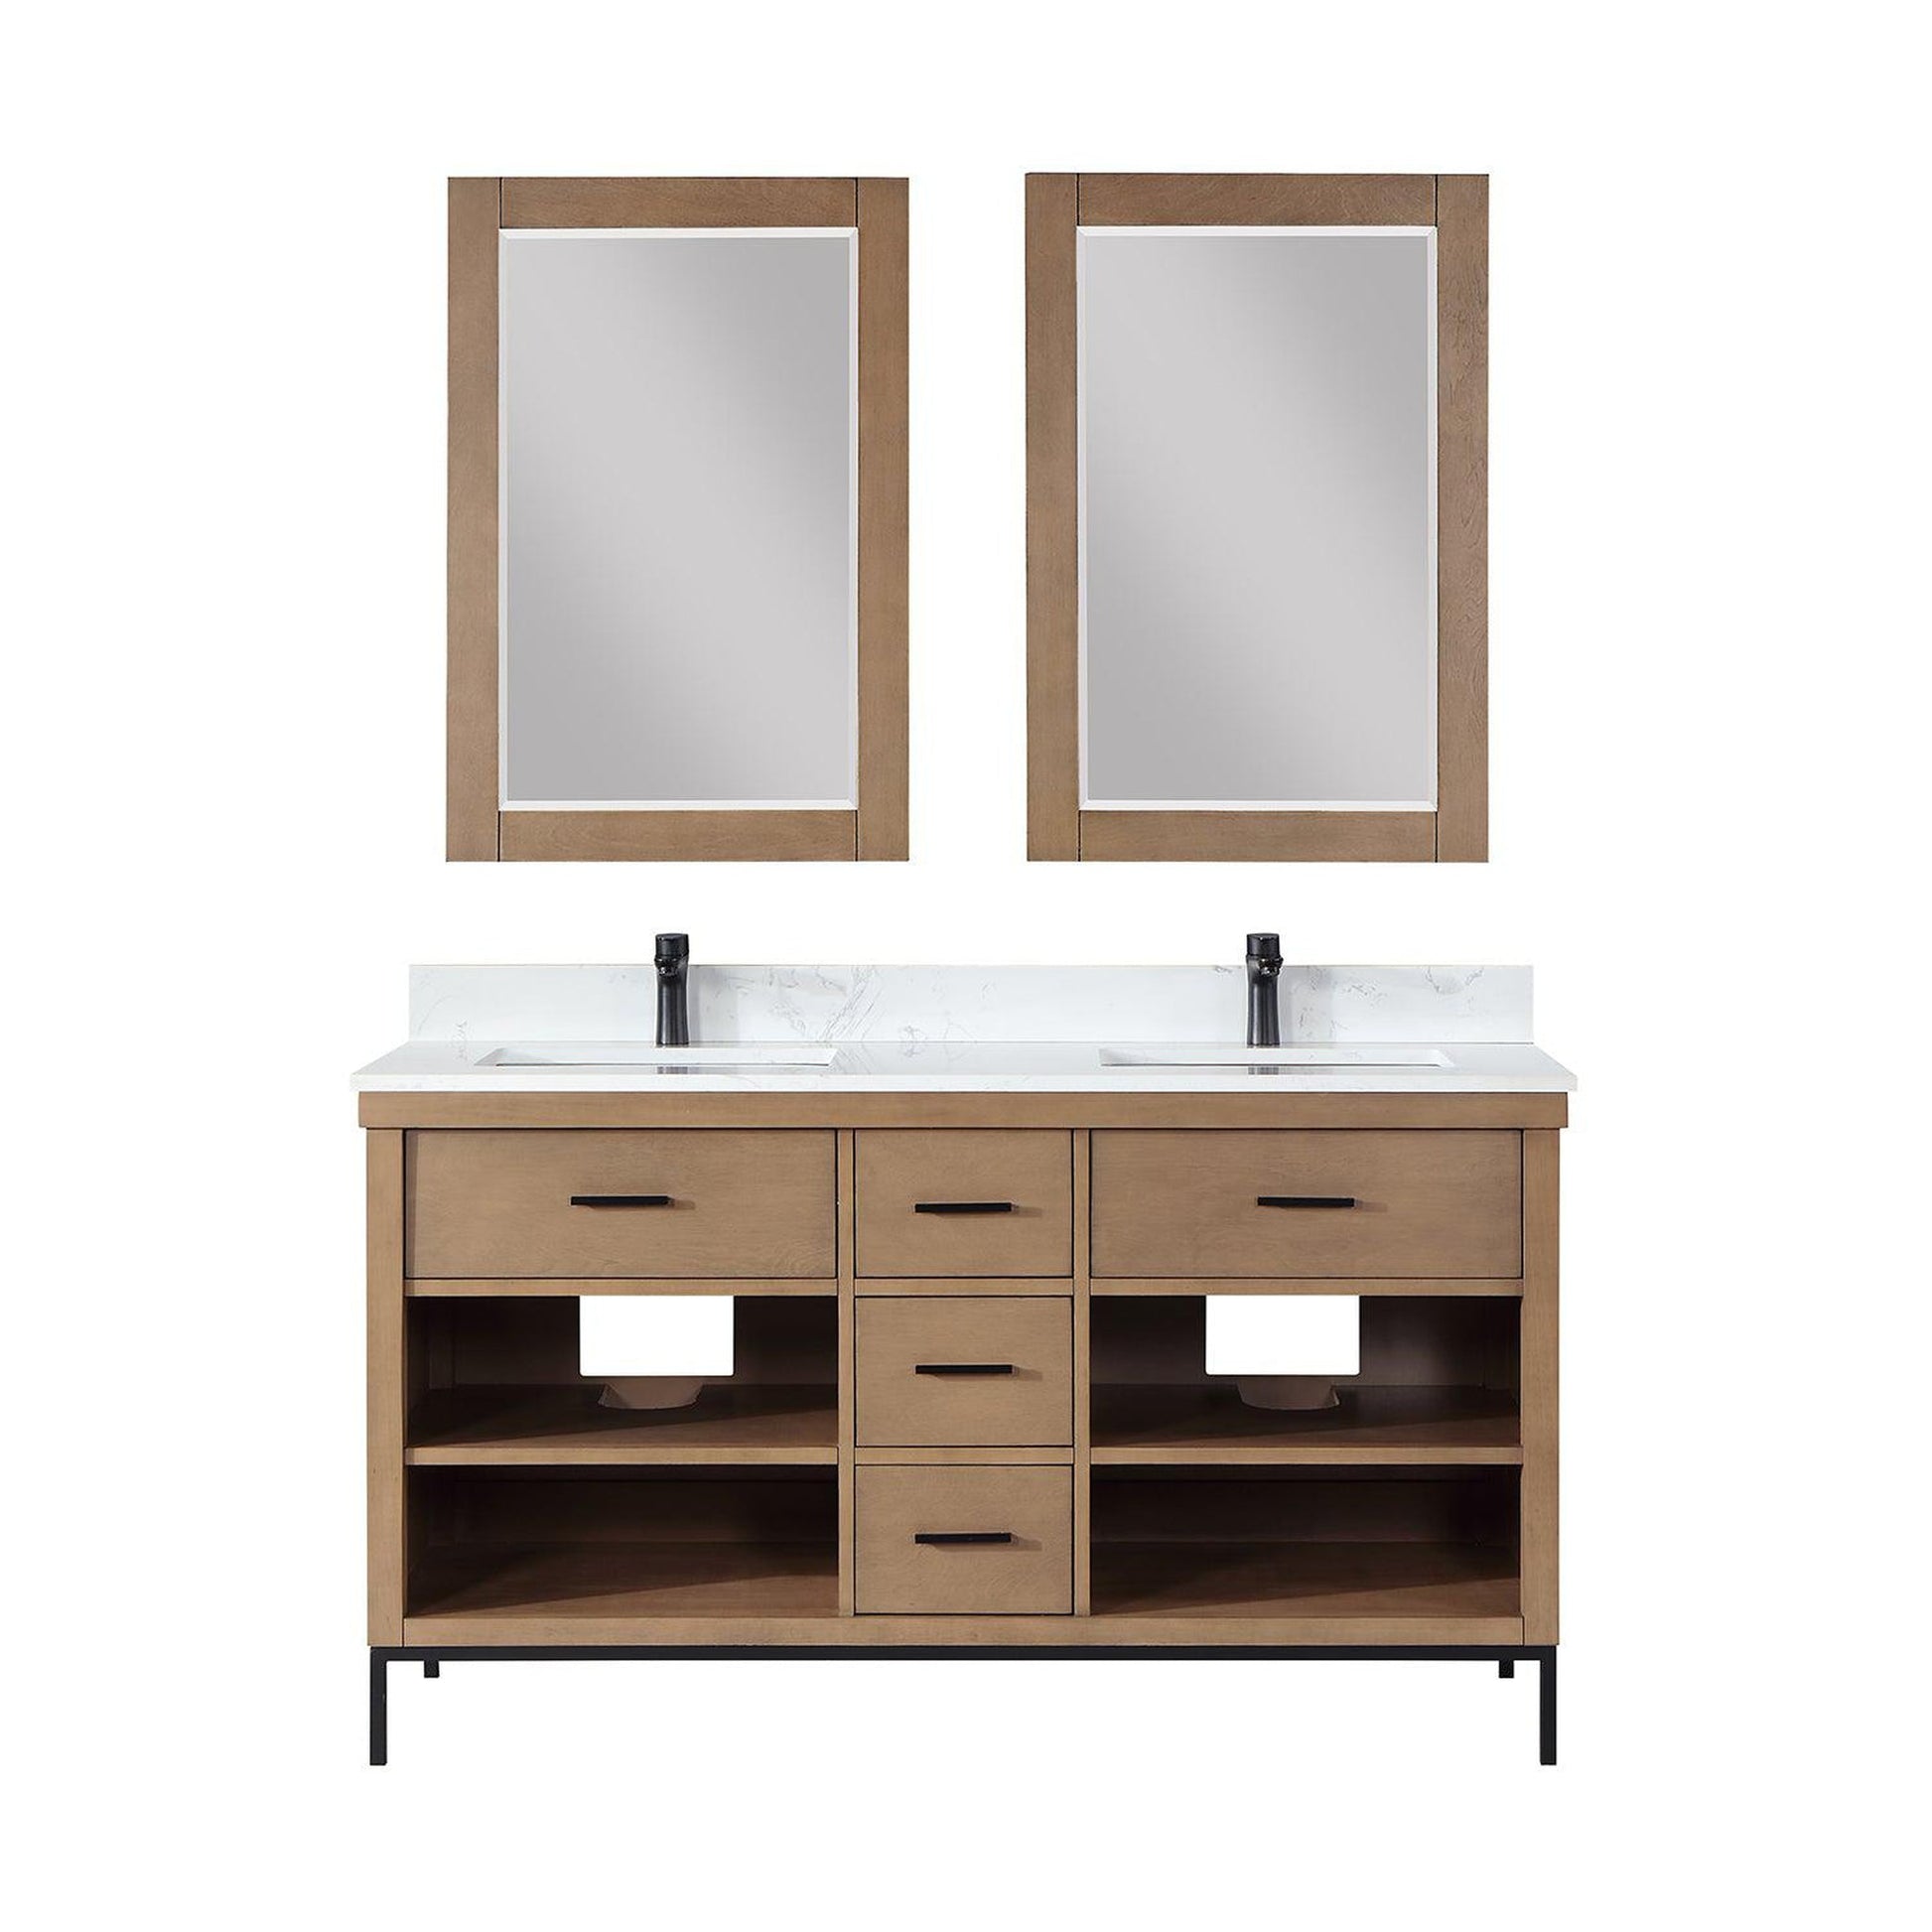 Altair Kesia 60" Brown Pine Freestanding Double Bathroom Vanity Set With Mirror, Stylish Aosta White Composite Stone Top, Two Rectangular Undermount Ceramic Sinks, Overflow, and Backsplash